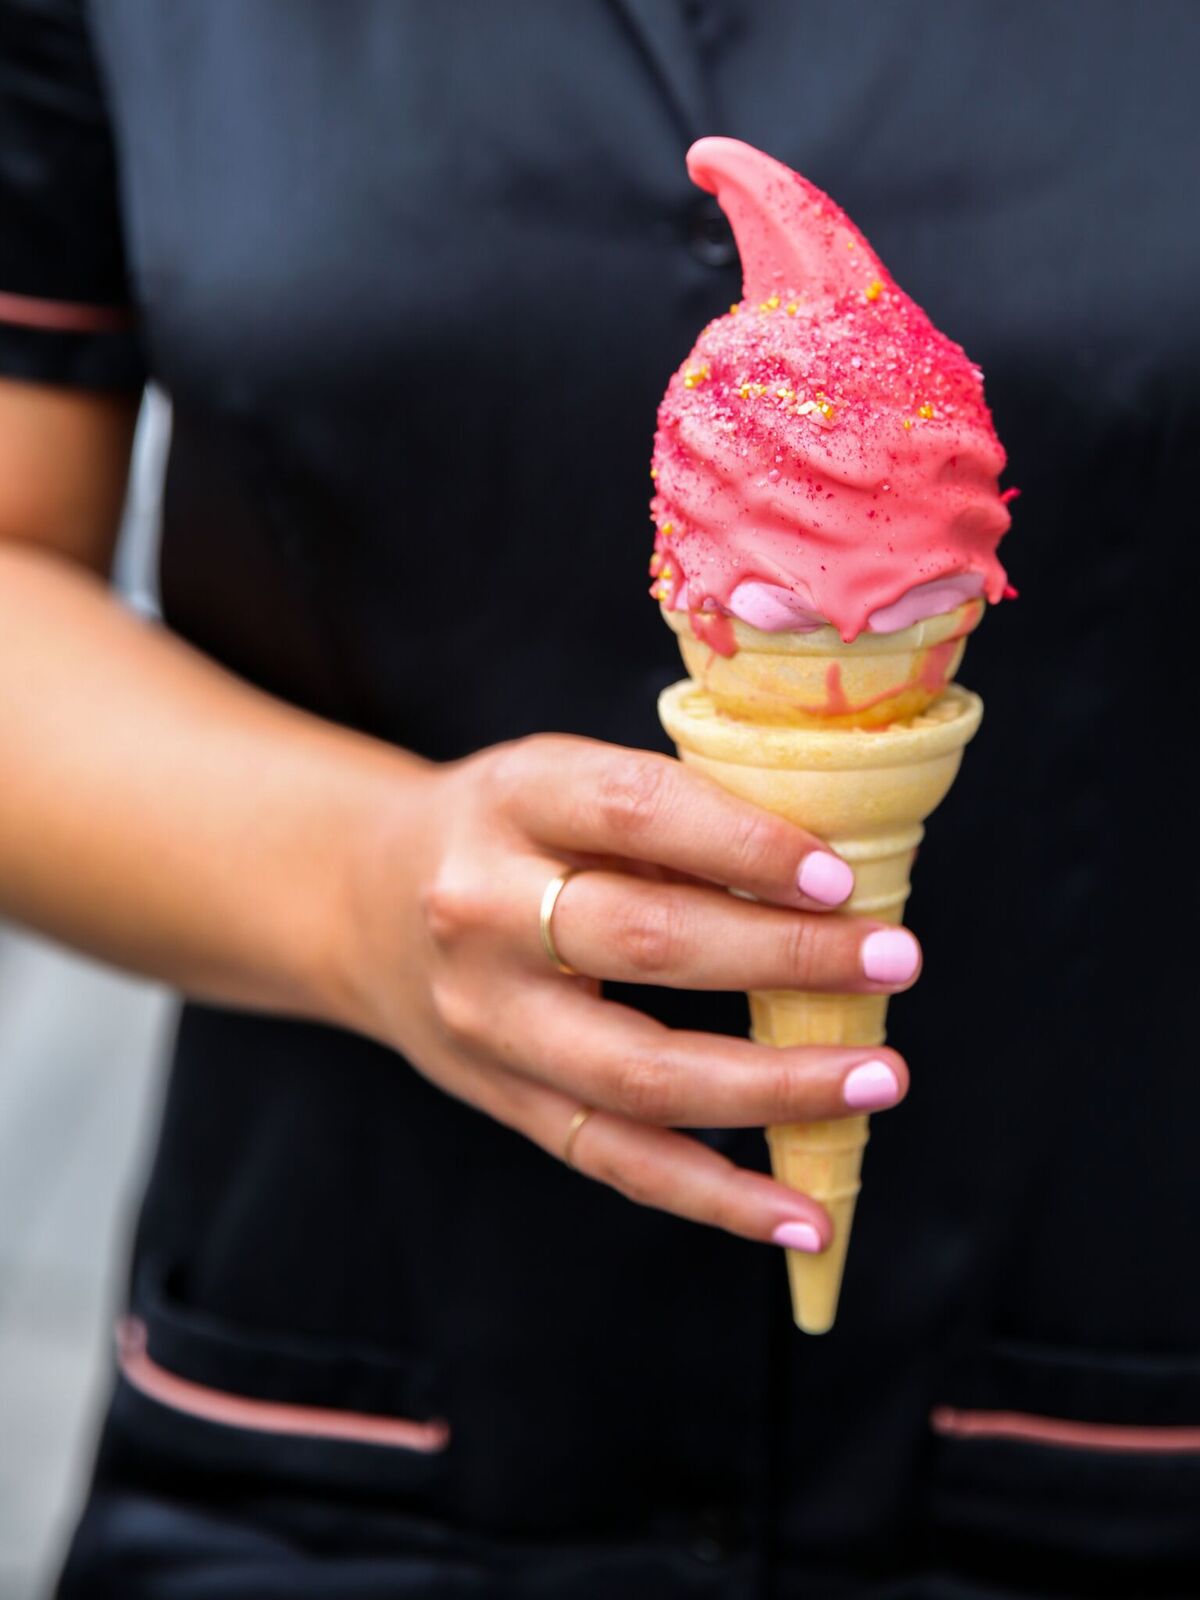 https://theweekendjaunts.com/wp-content/uploads/2017/07/OddFellows-Carnival-ice-cream-cone.jpg